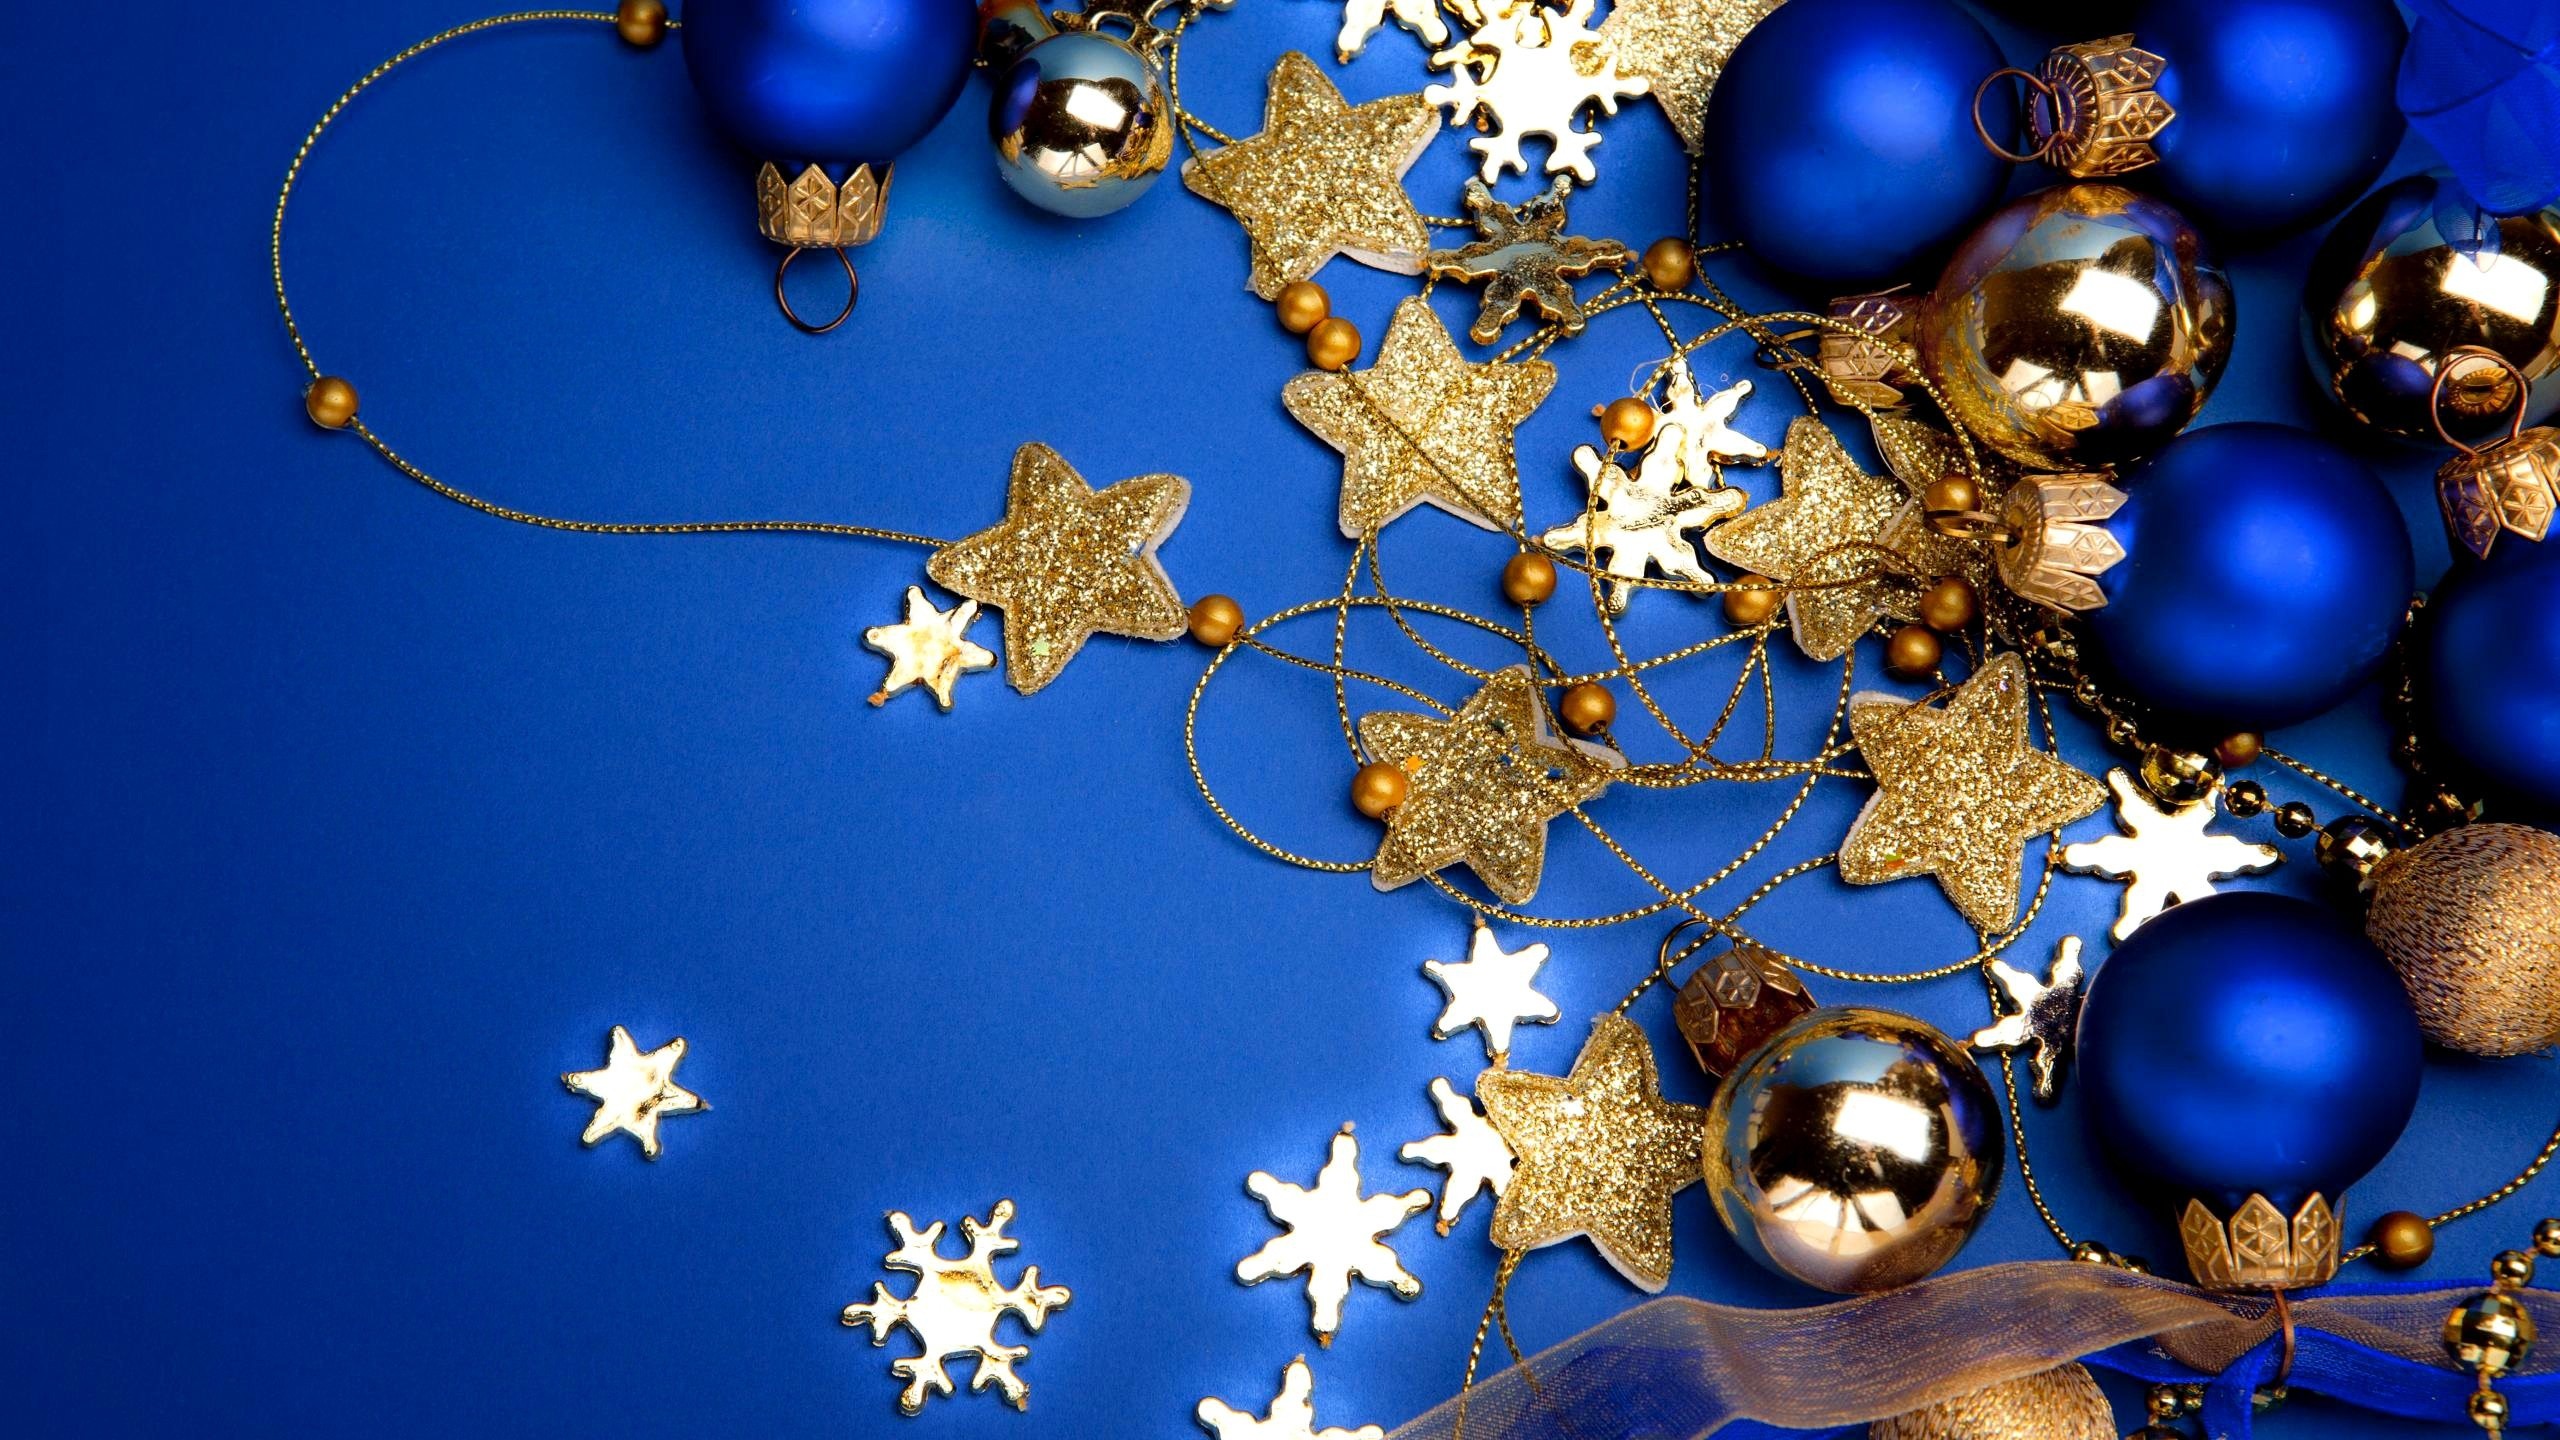 2560x1440 Blue Christmas theme wallpaper 2014